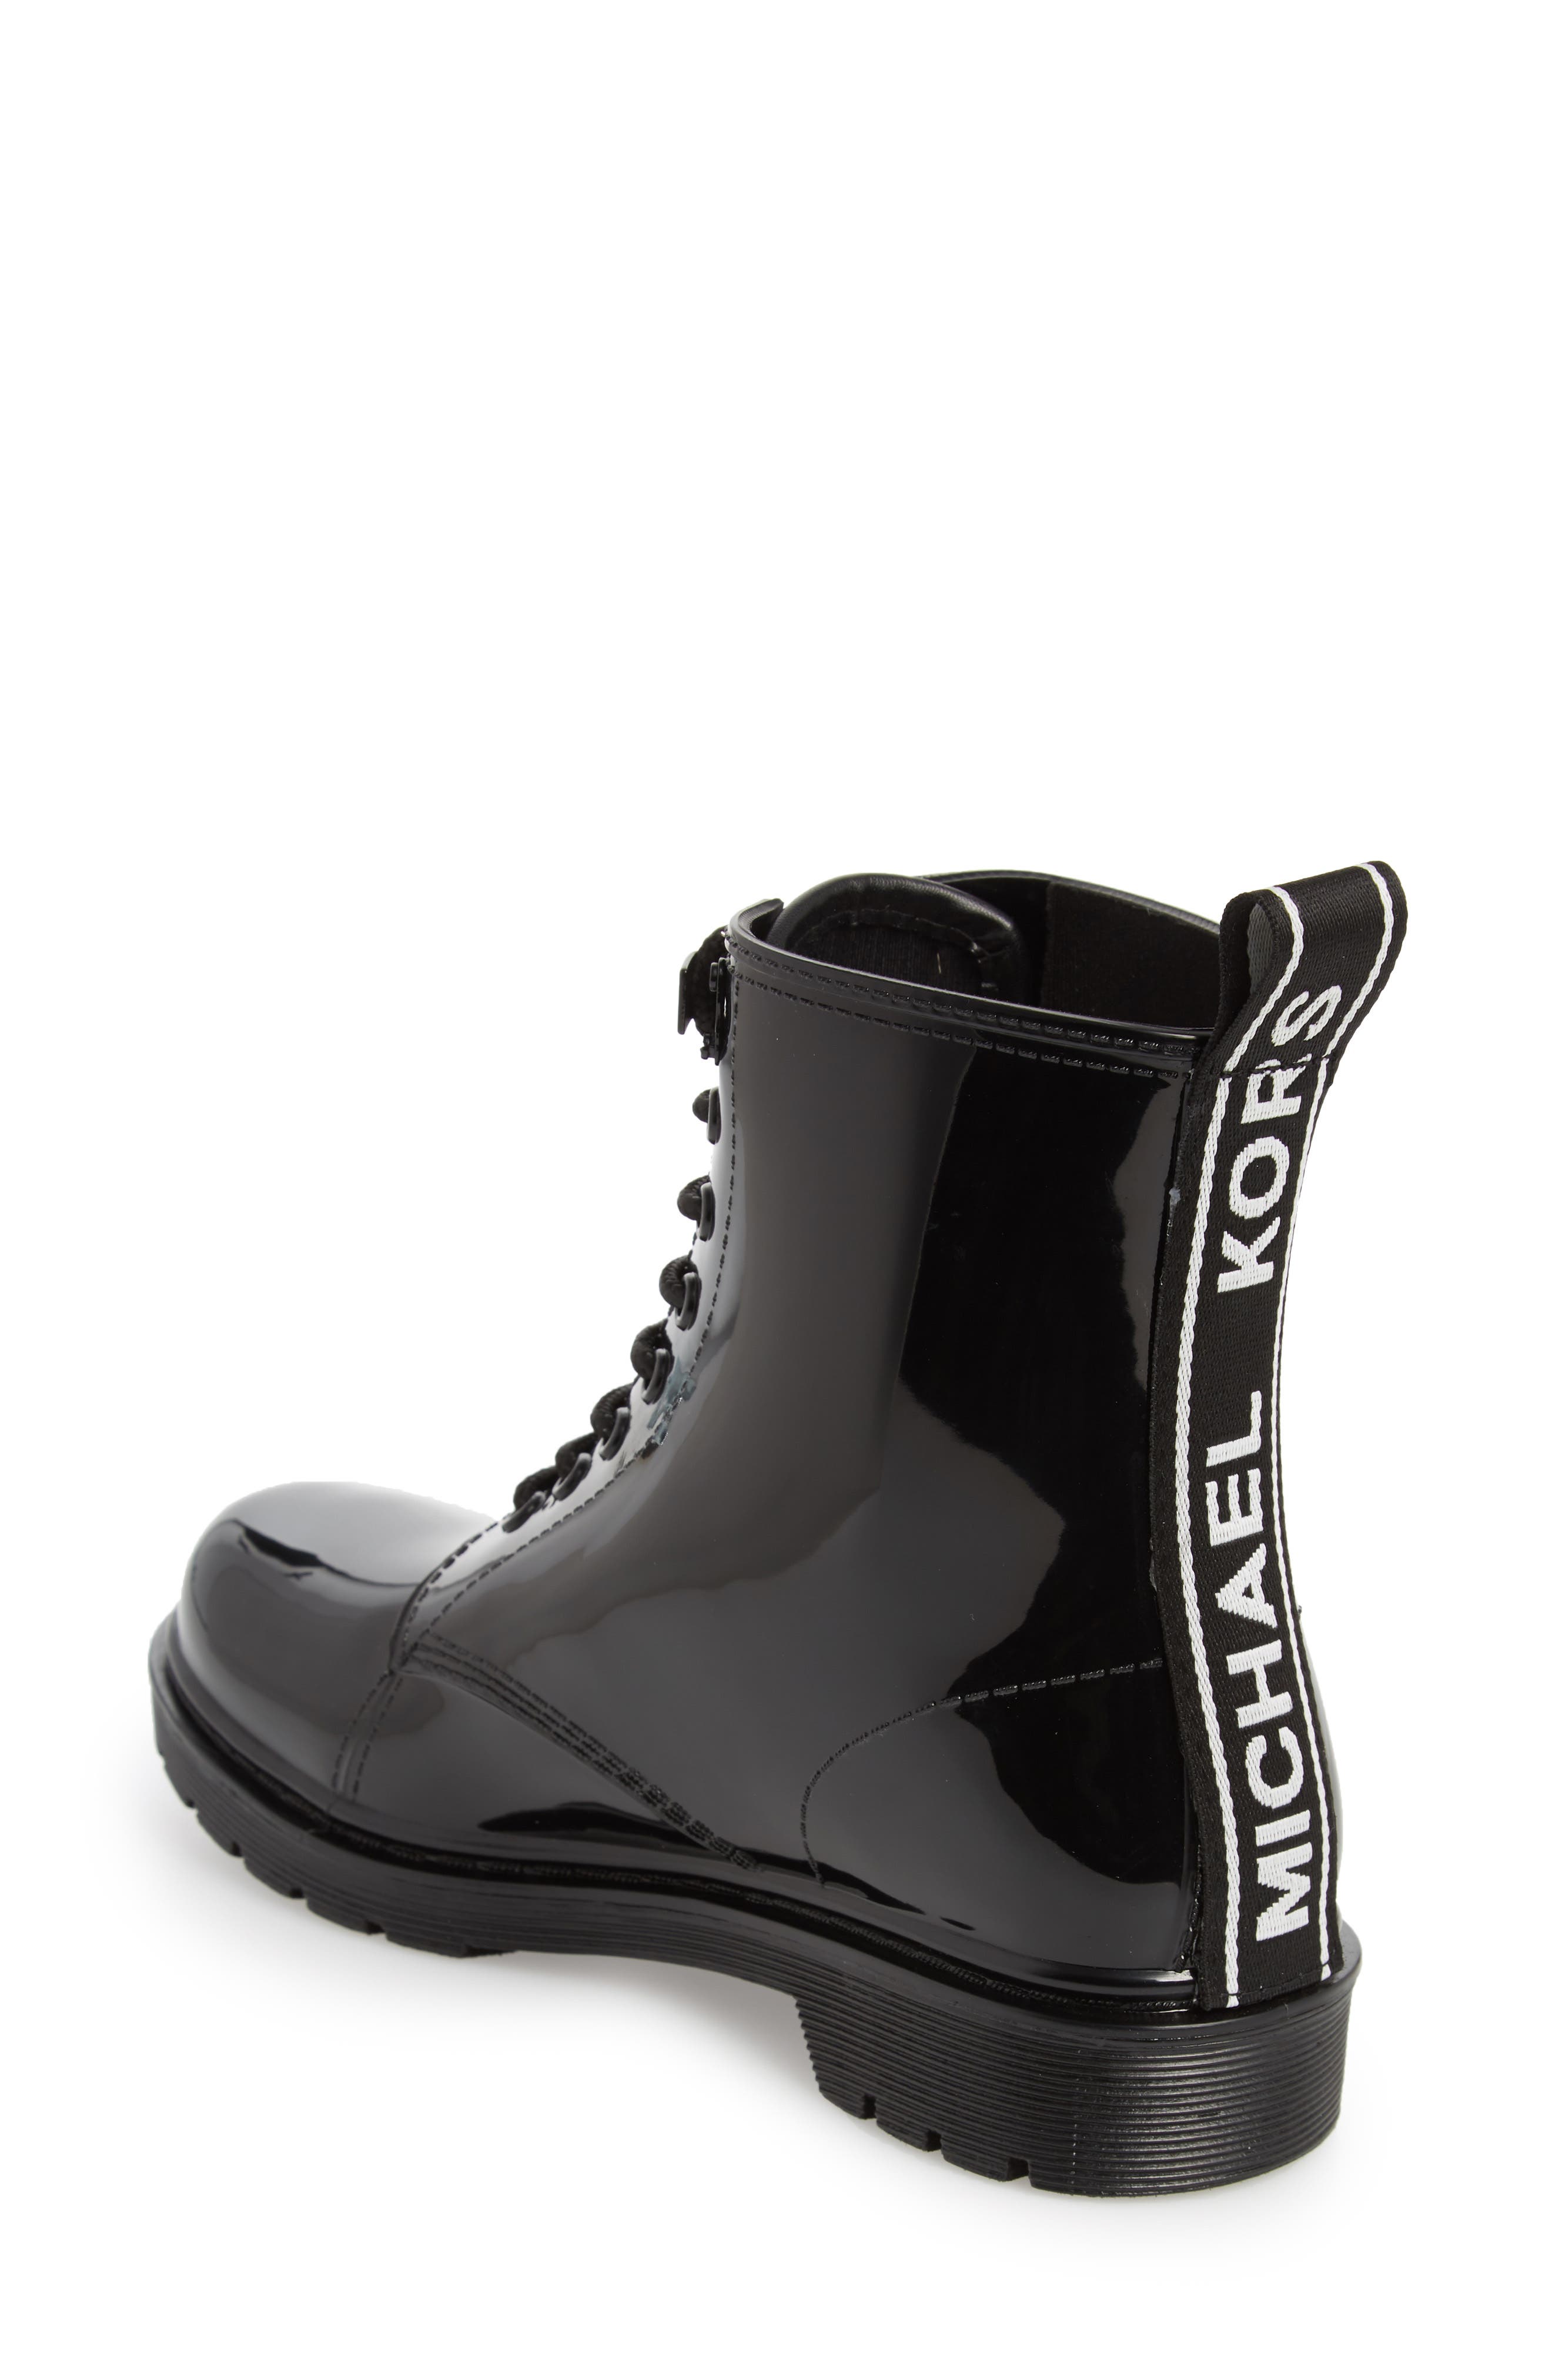 mk rain boots nordstrom